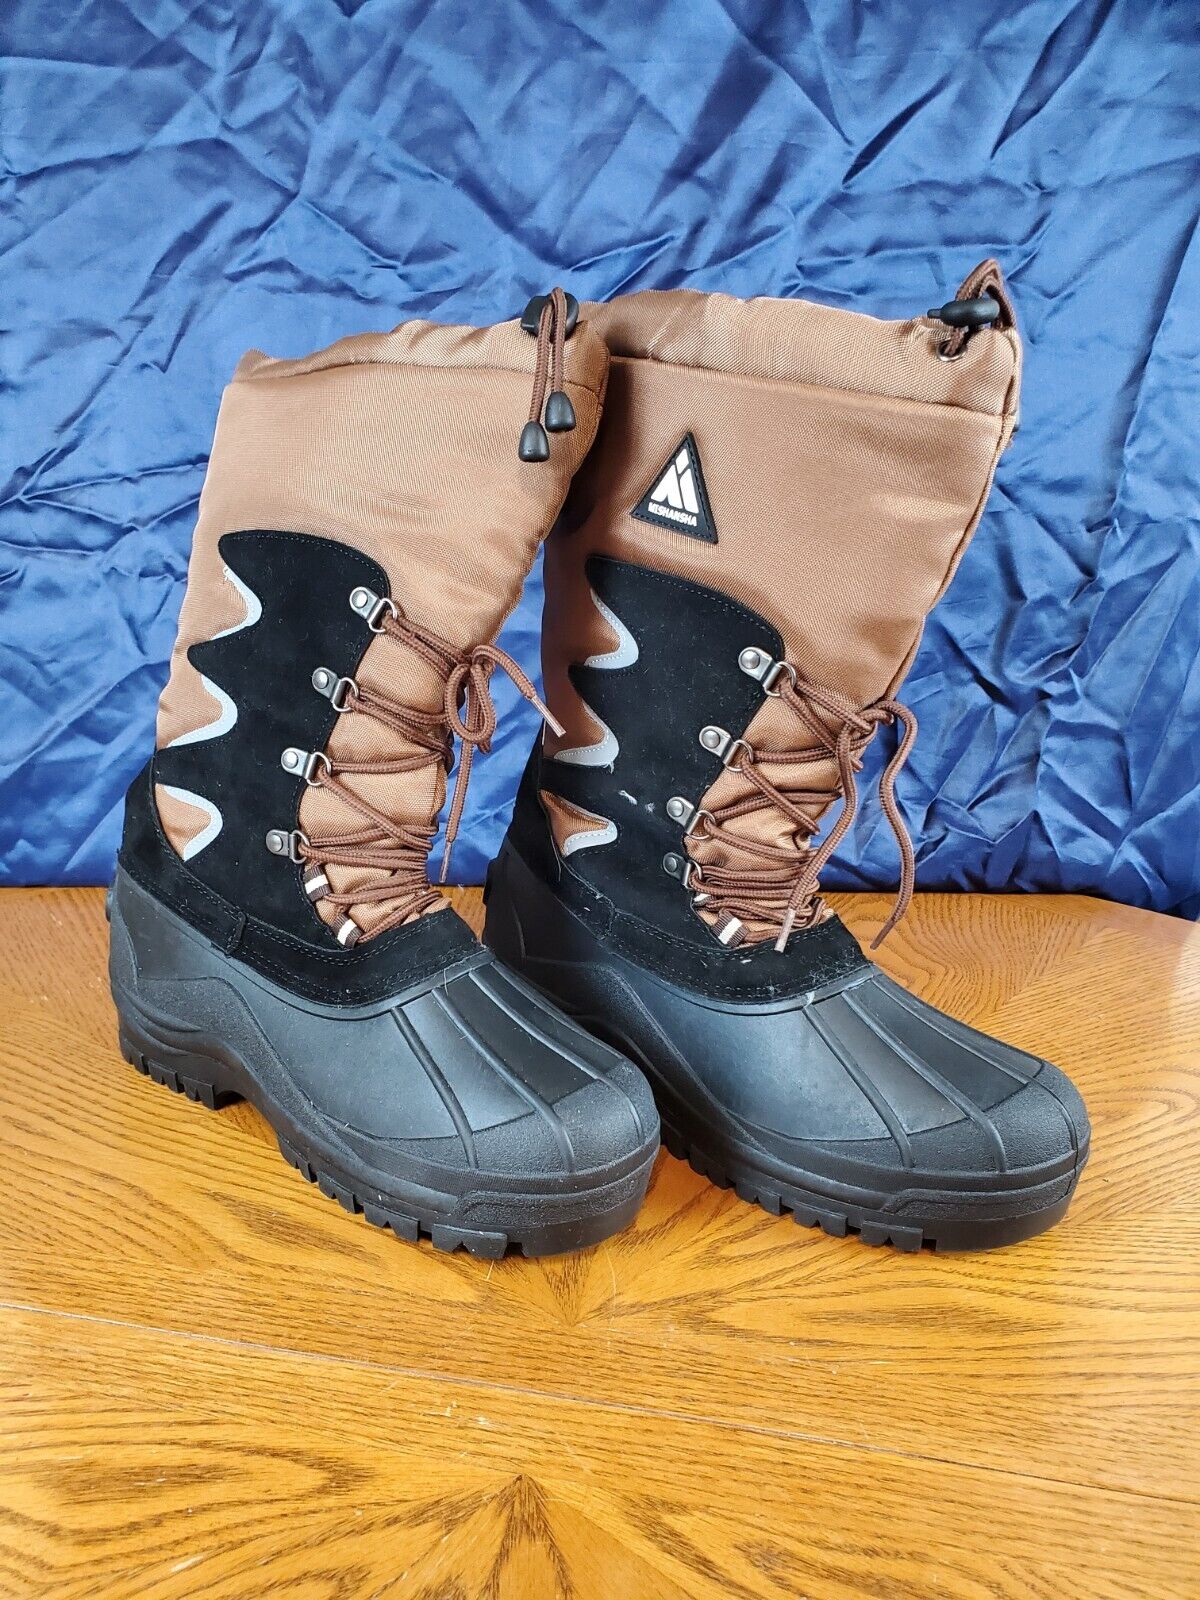 Mishansha Men's 9 Winter Boots Waterproof Non-Slip Snow Boots Gray Faux